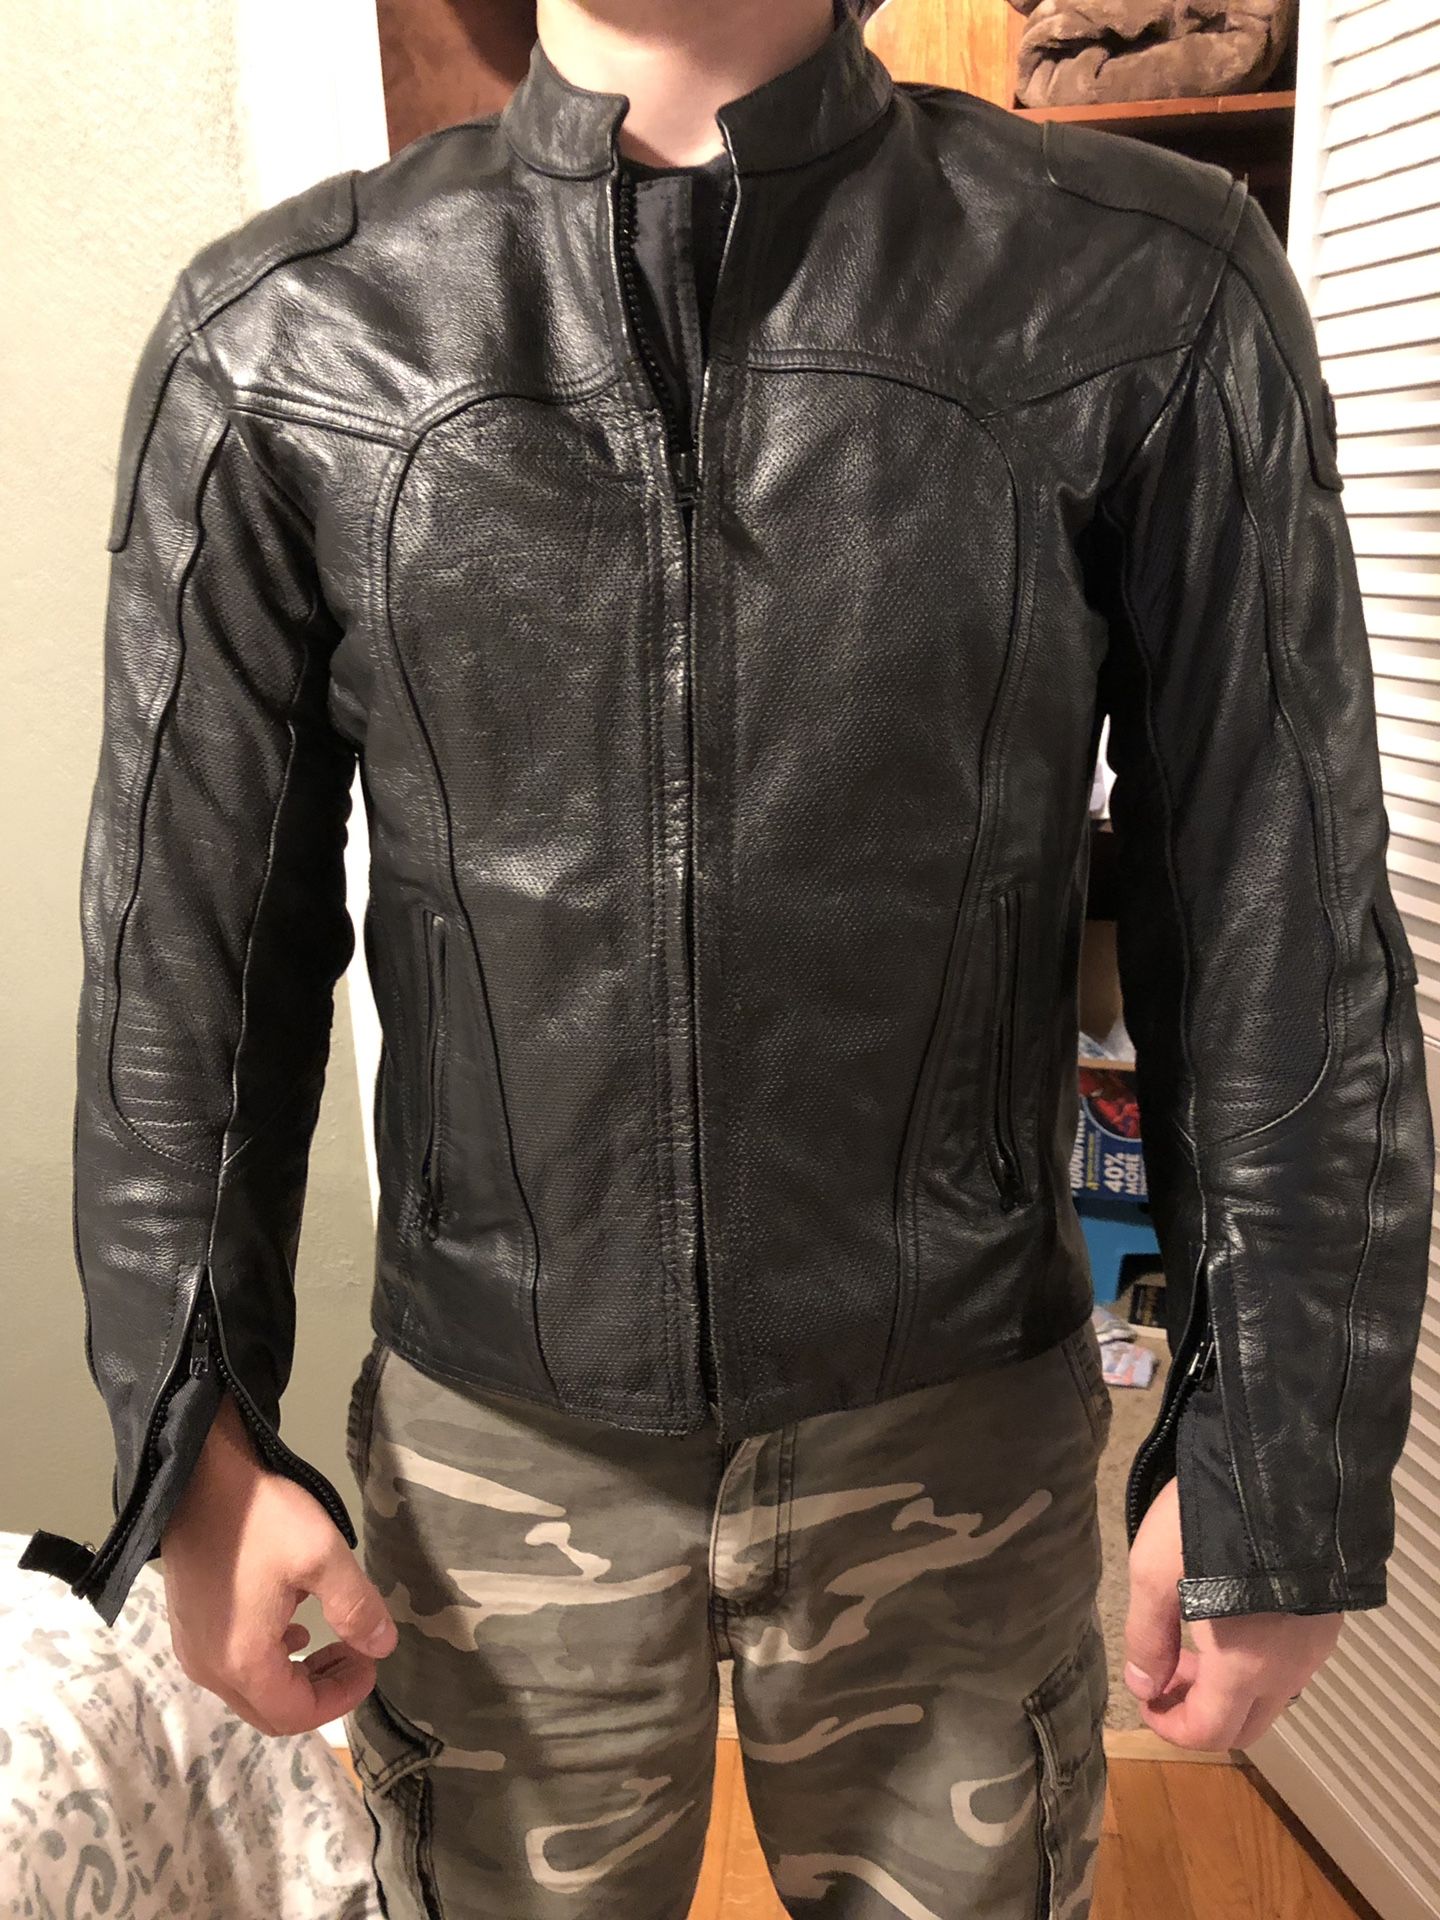 BiLT men’s leather motorcycle jacket